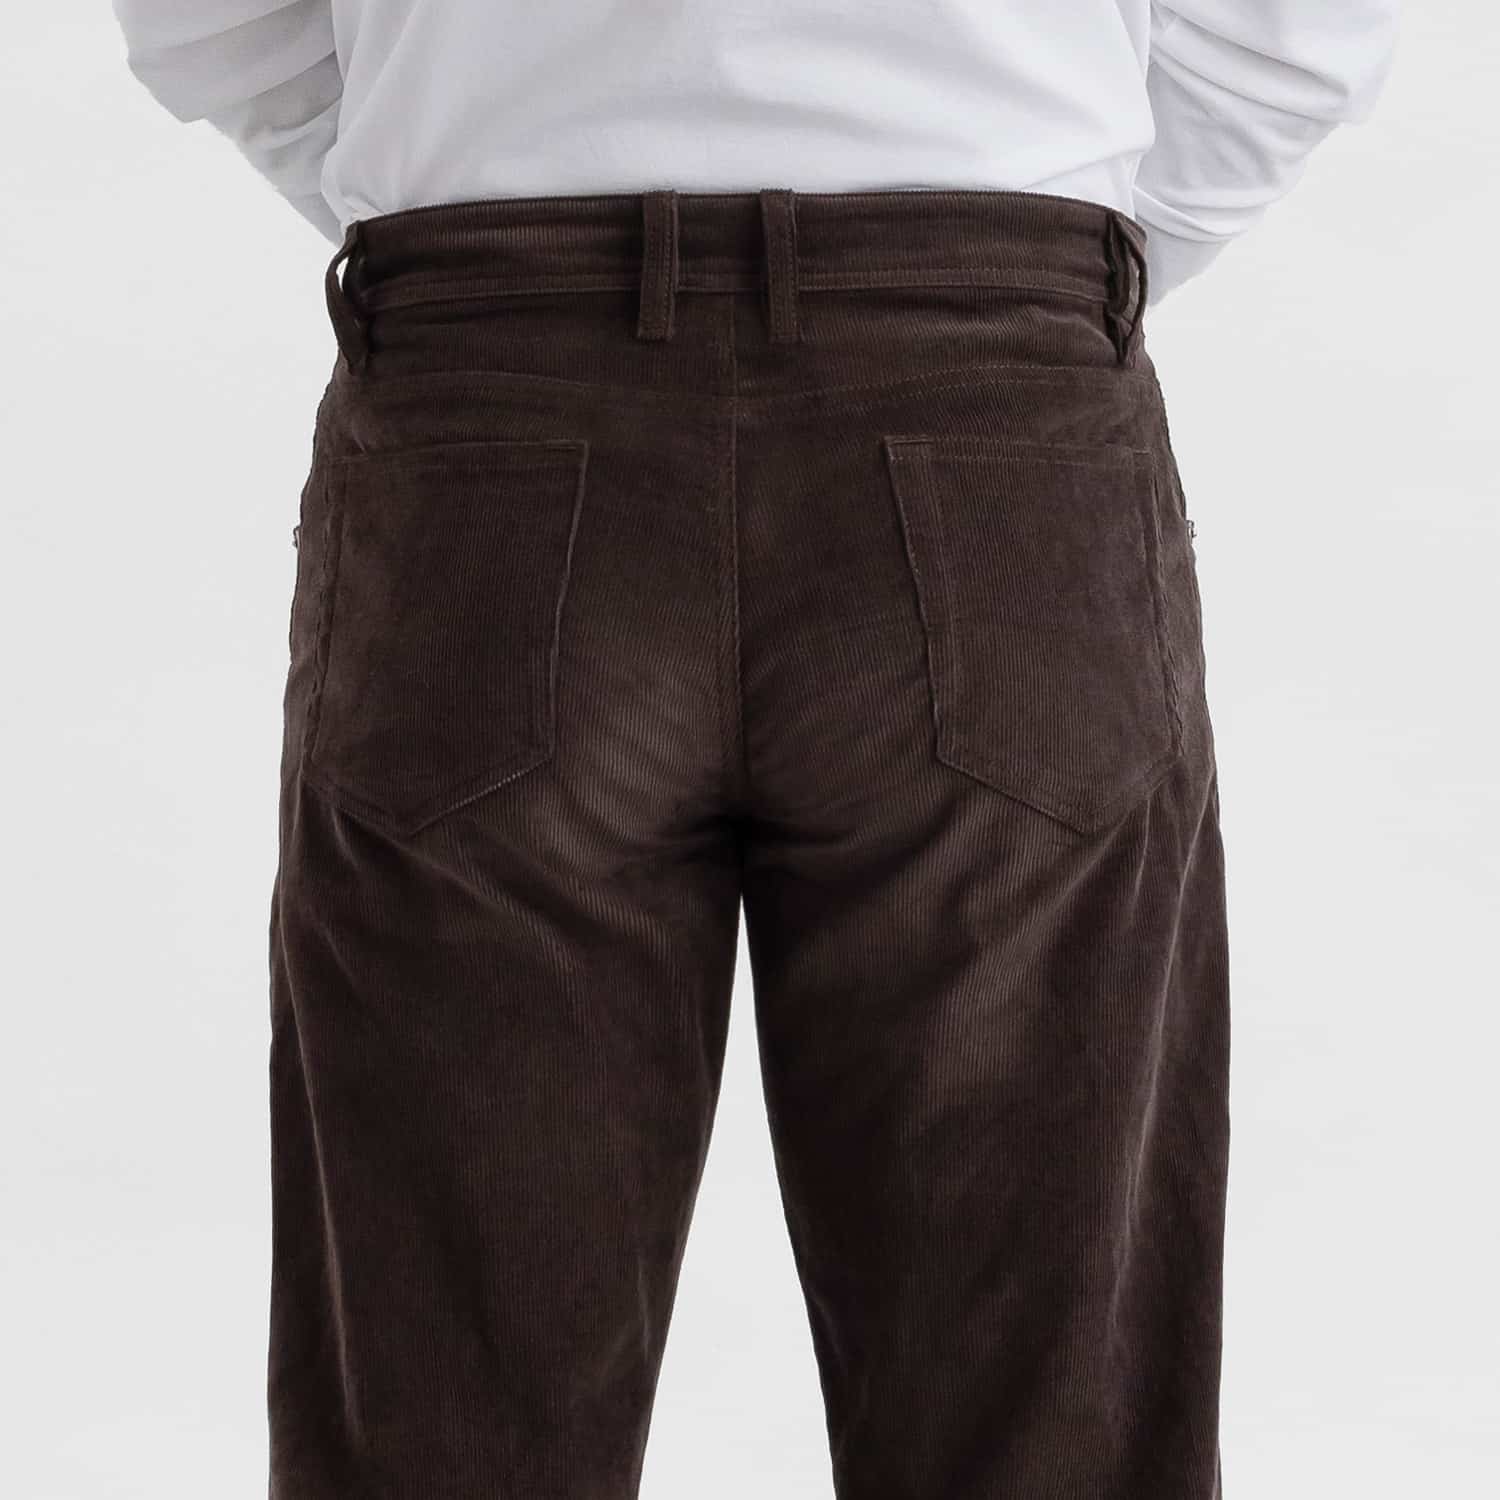 Loose Fit Corduroy trousers - Brown - Men | H&M IN